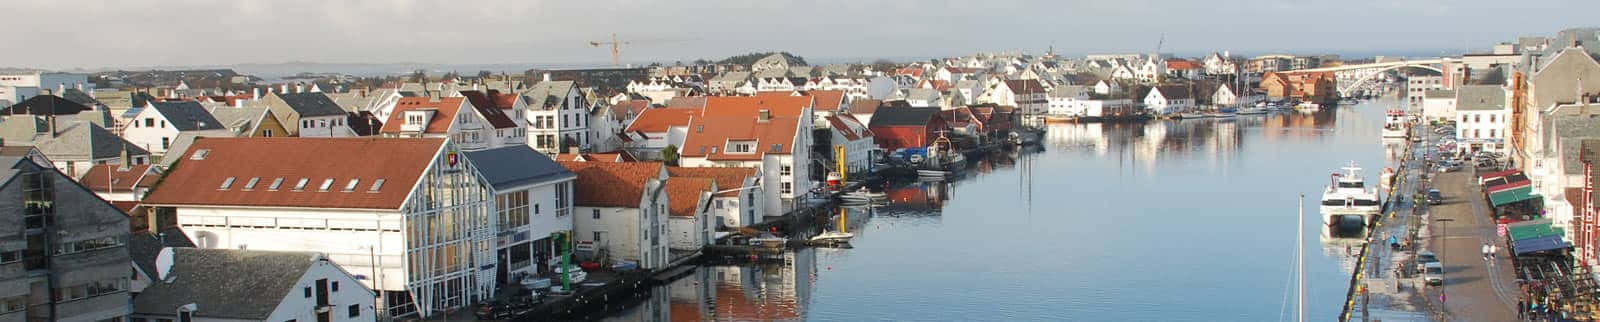 Haugesund Waterfront Panorama Wallpaper